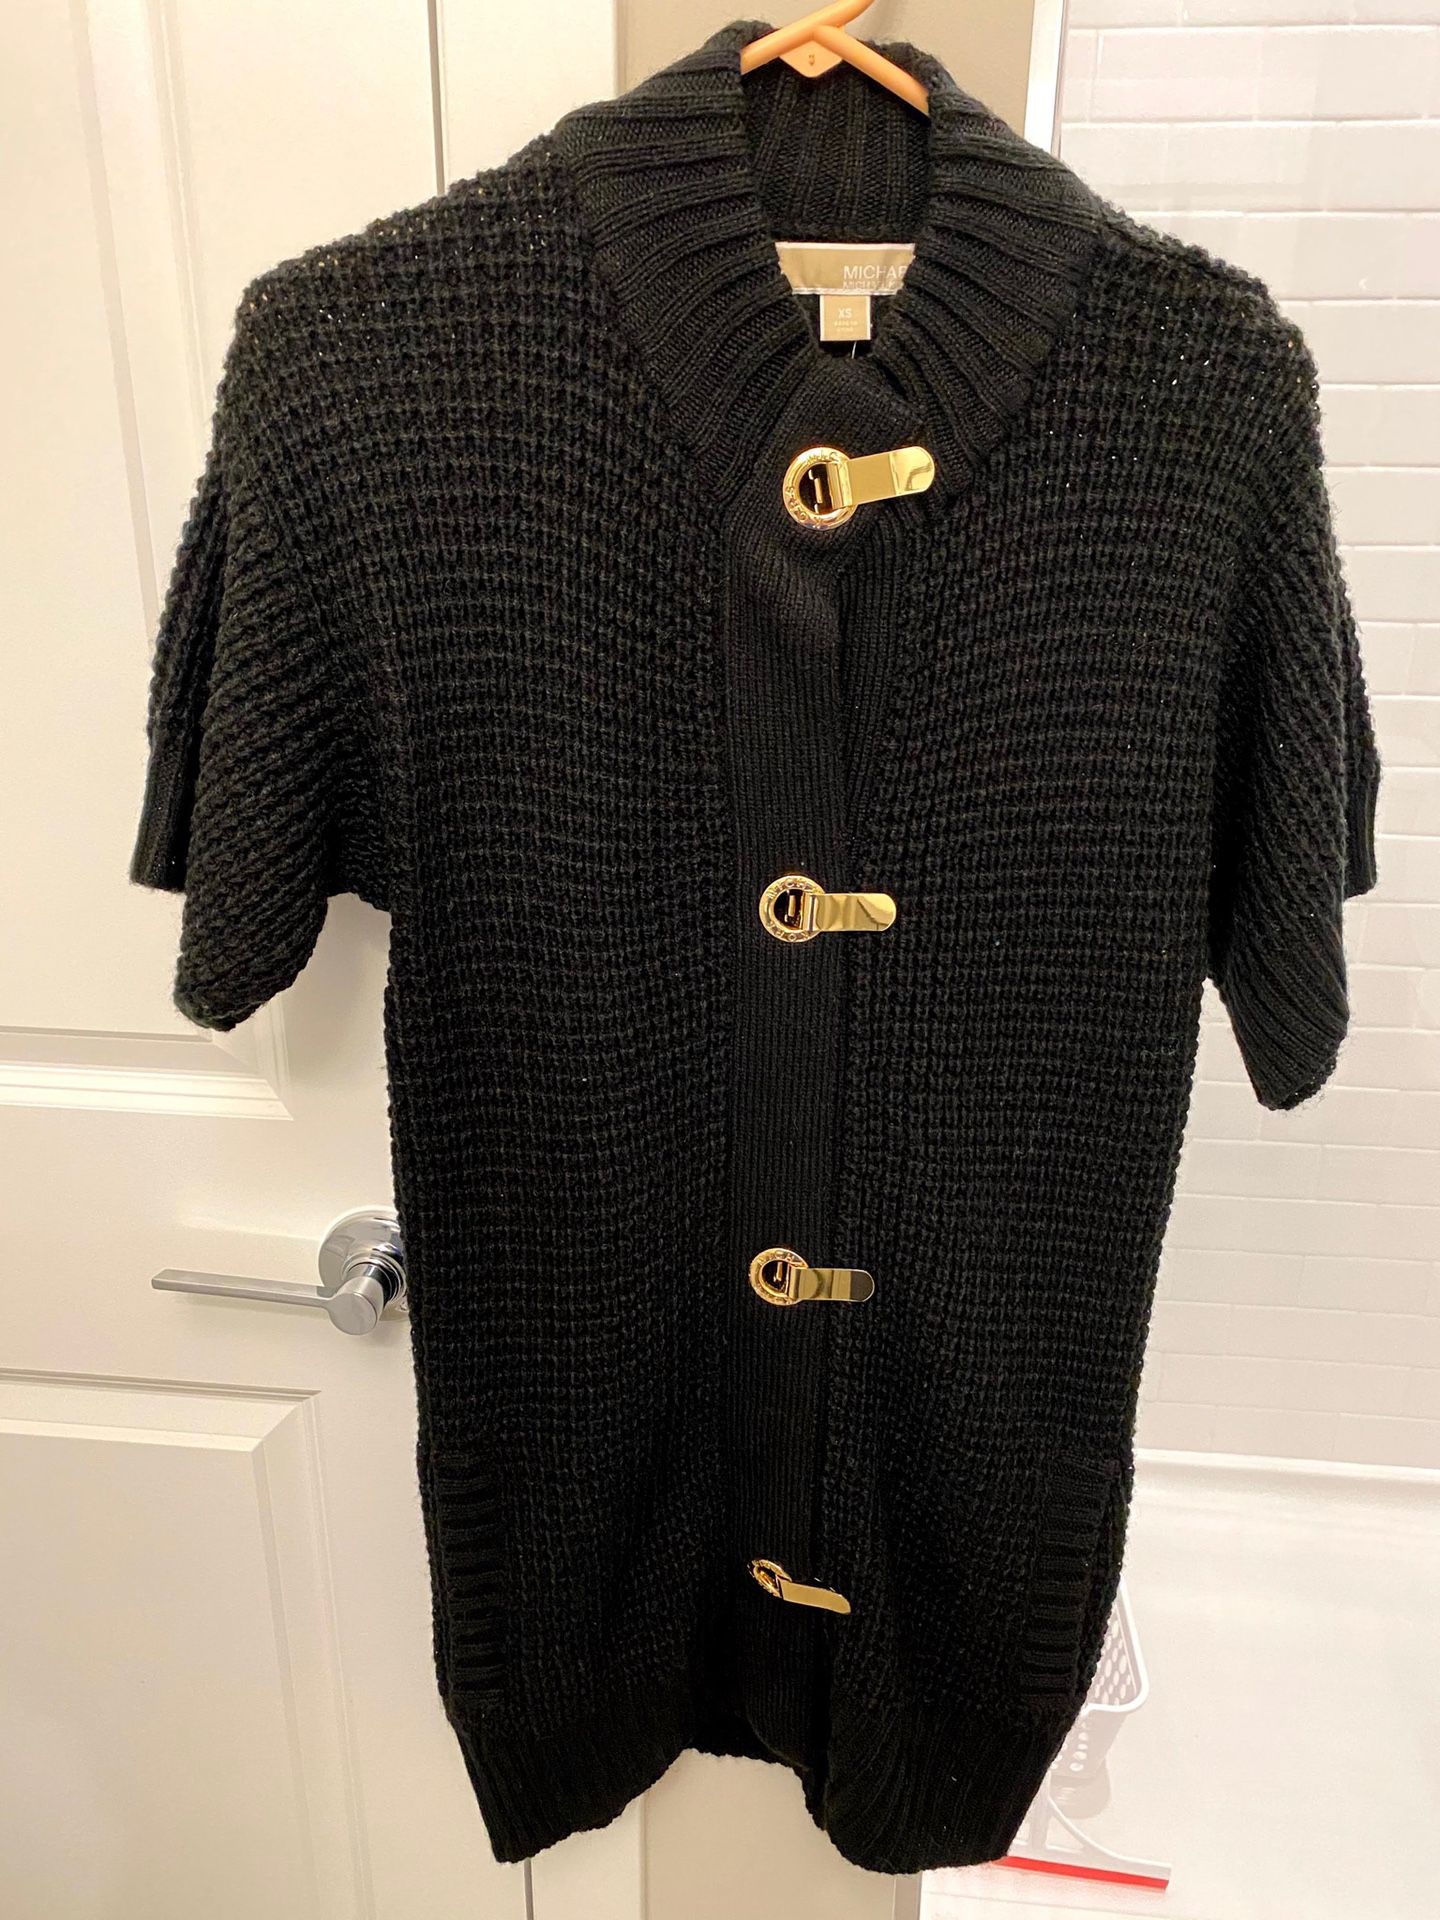 Brand New Women’s Michael Kors Black and Gold Oversized Sweater